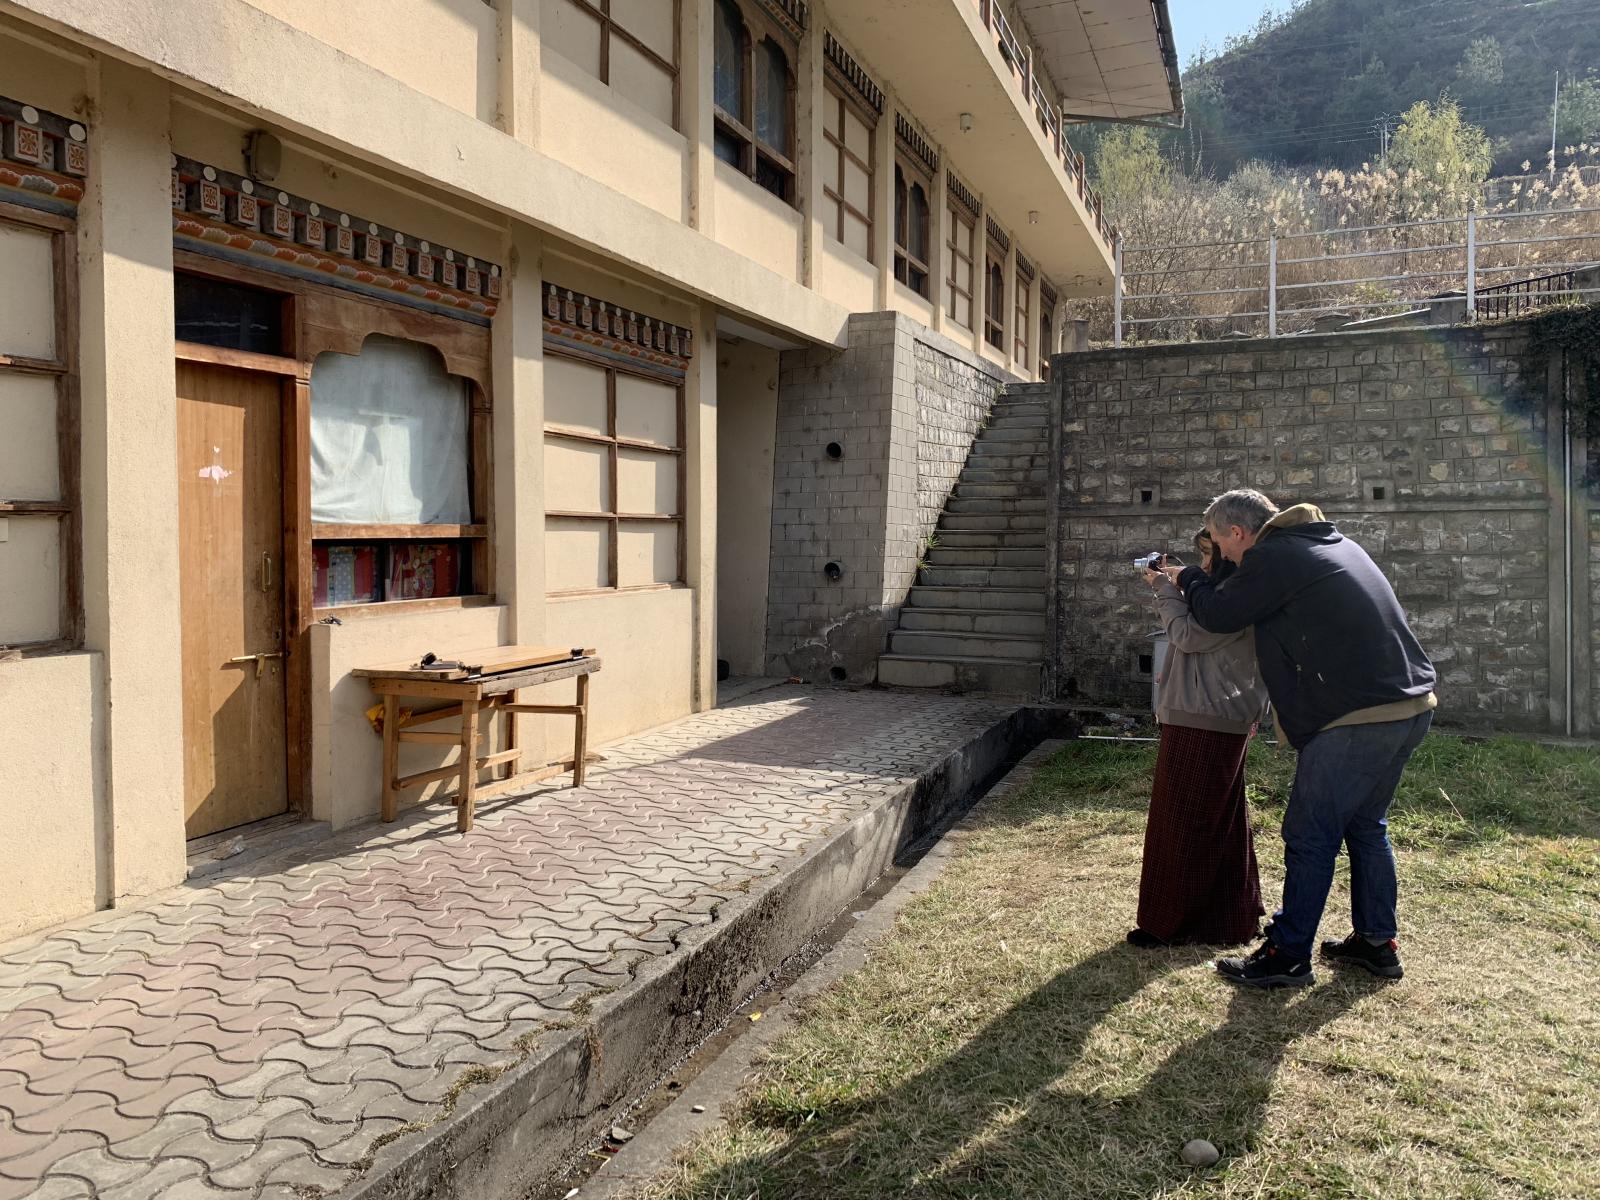 Image from Behind the Scenes - Thimpu, Bhutan. Kirsten Elstner